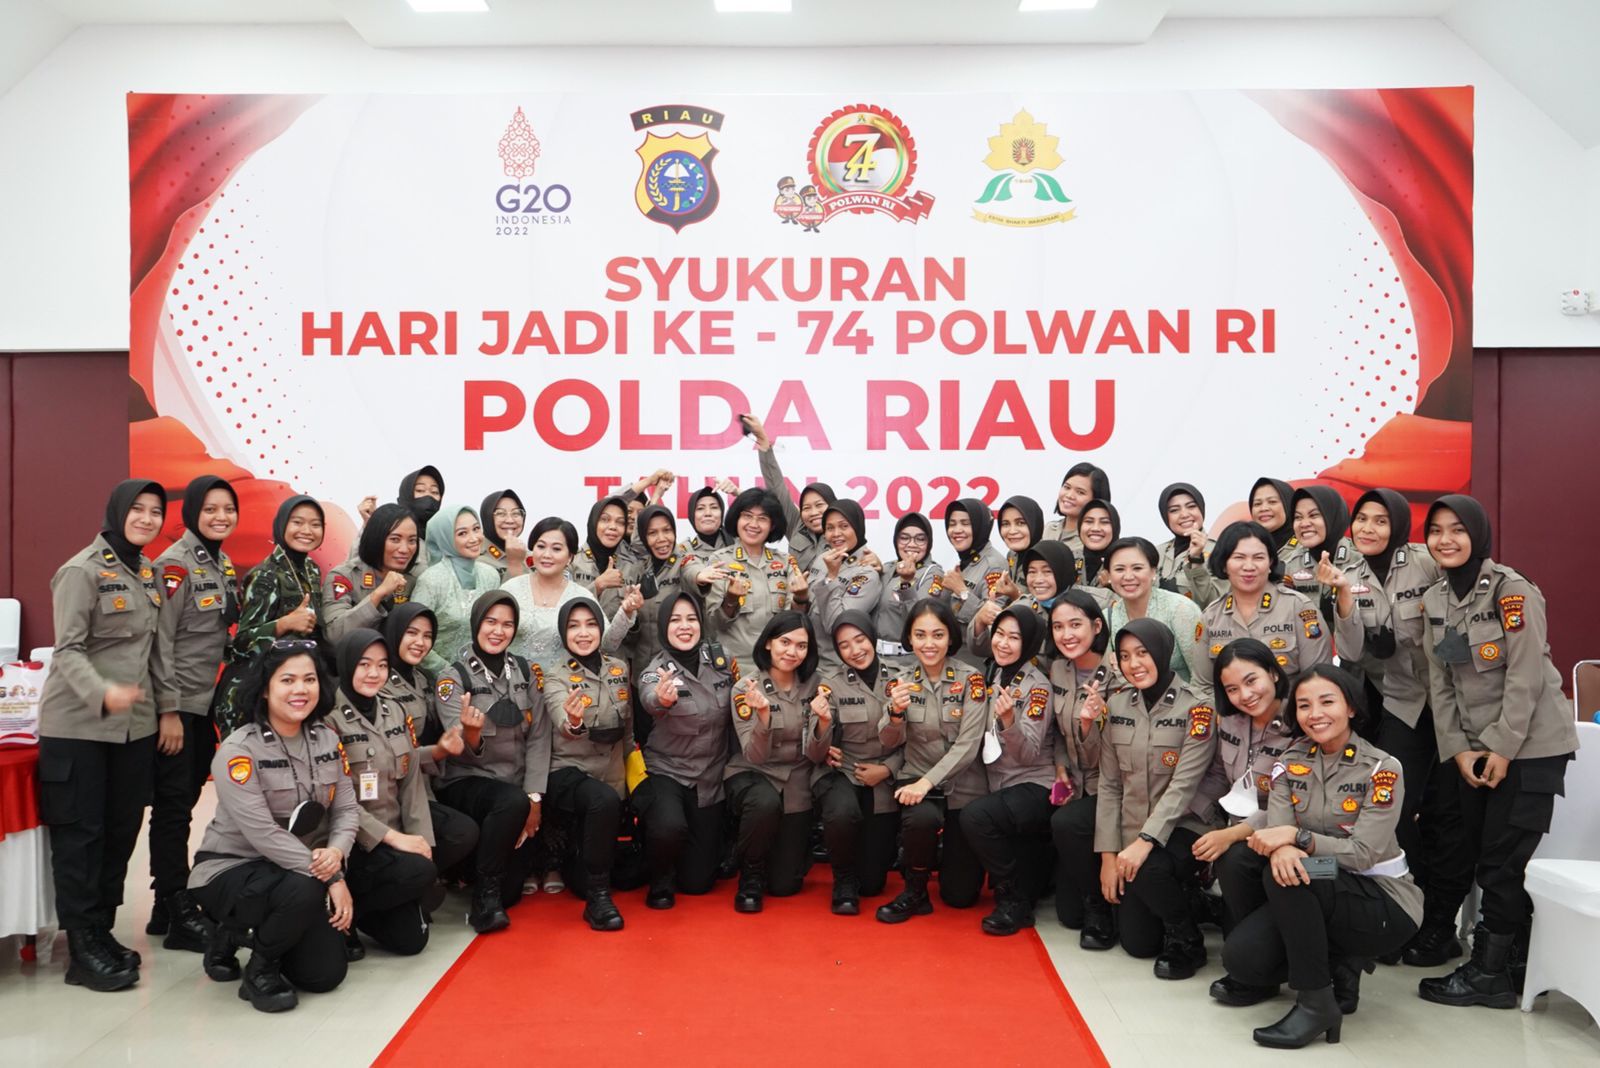 Kapolda Riau Berikan Penghargaan ke Polwan, Yuk Lihat 4 Wanita Cantik Berprestasi